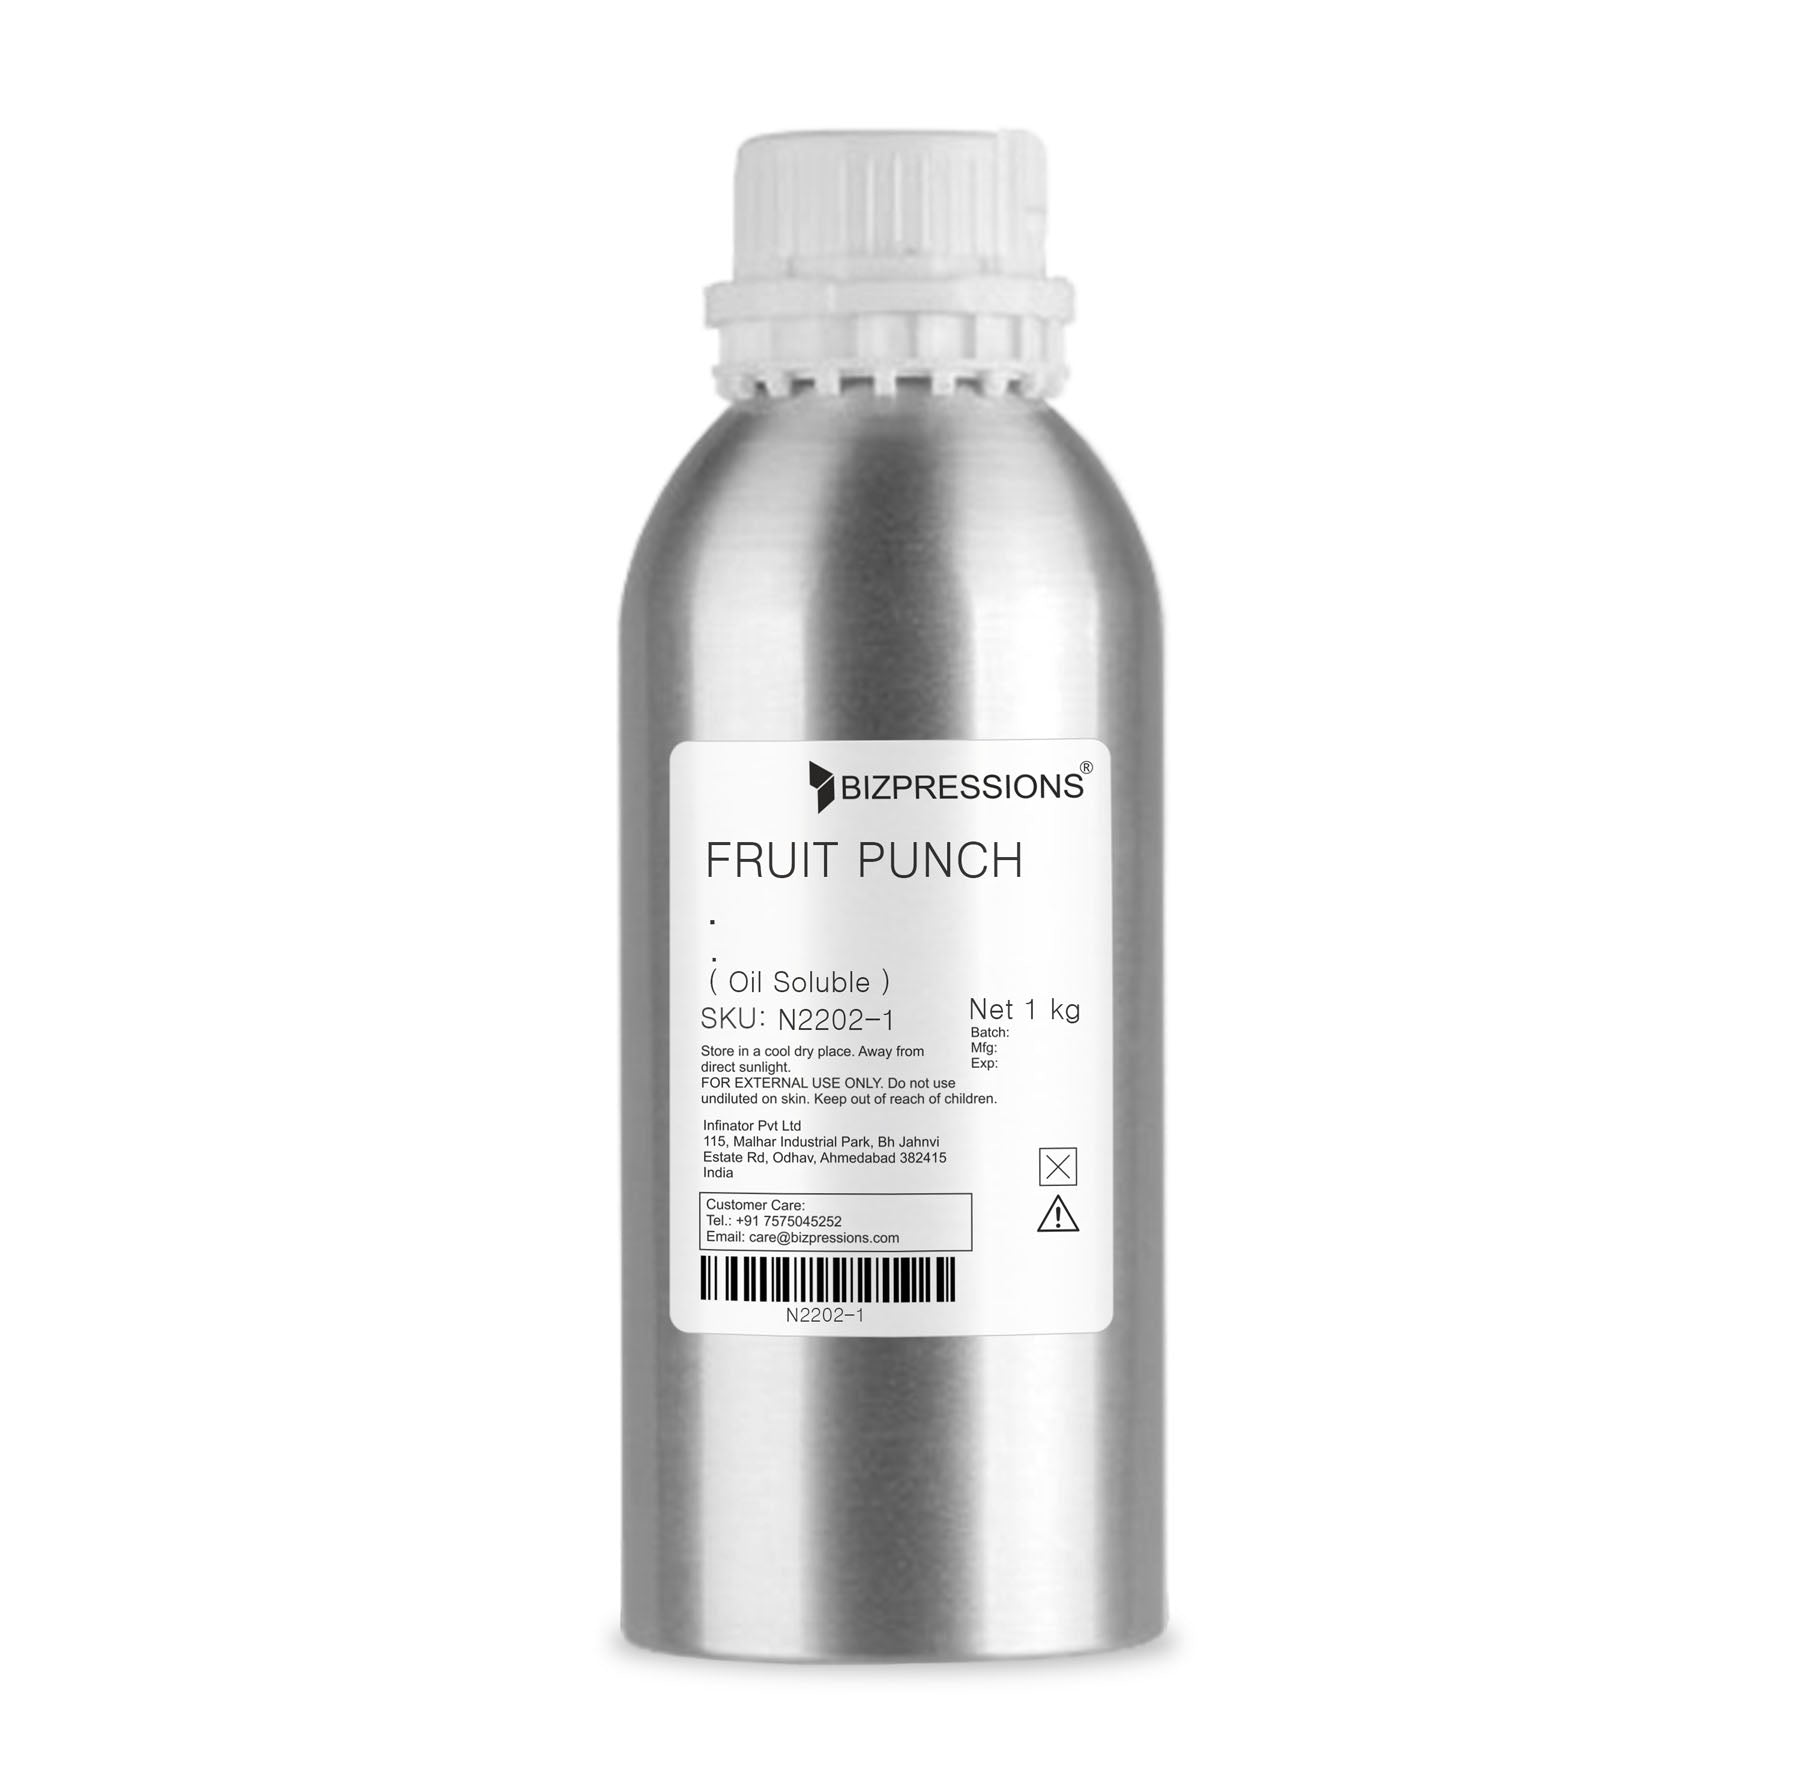 FRUIT PUNCH - Fragrance ( Oil Soluble ) - 1 kg